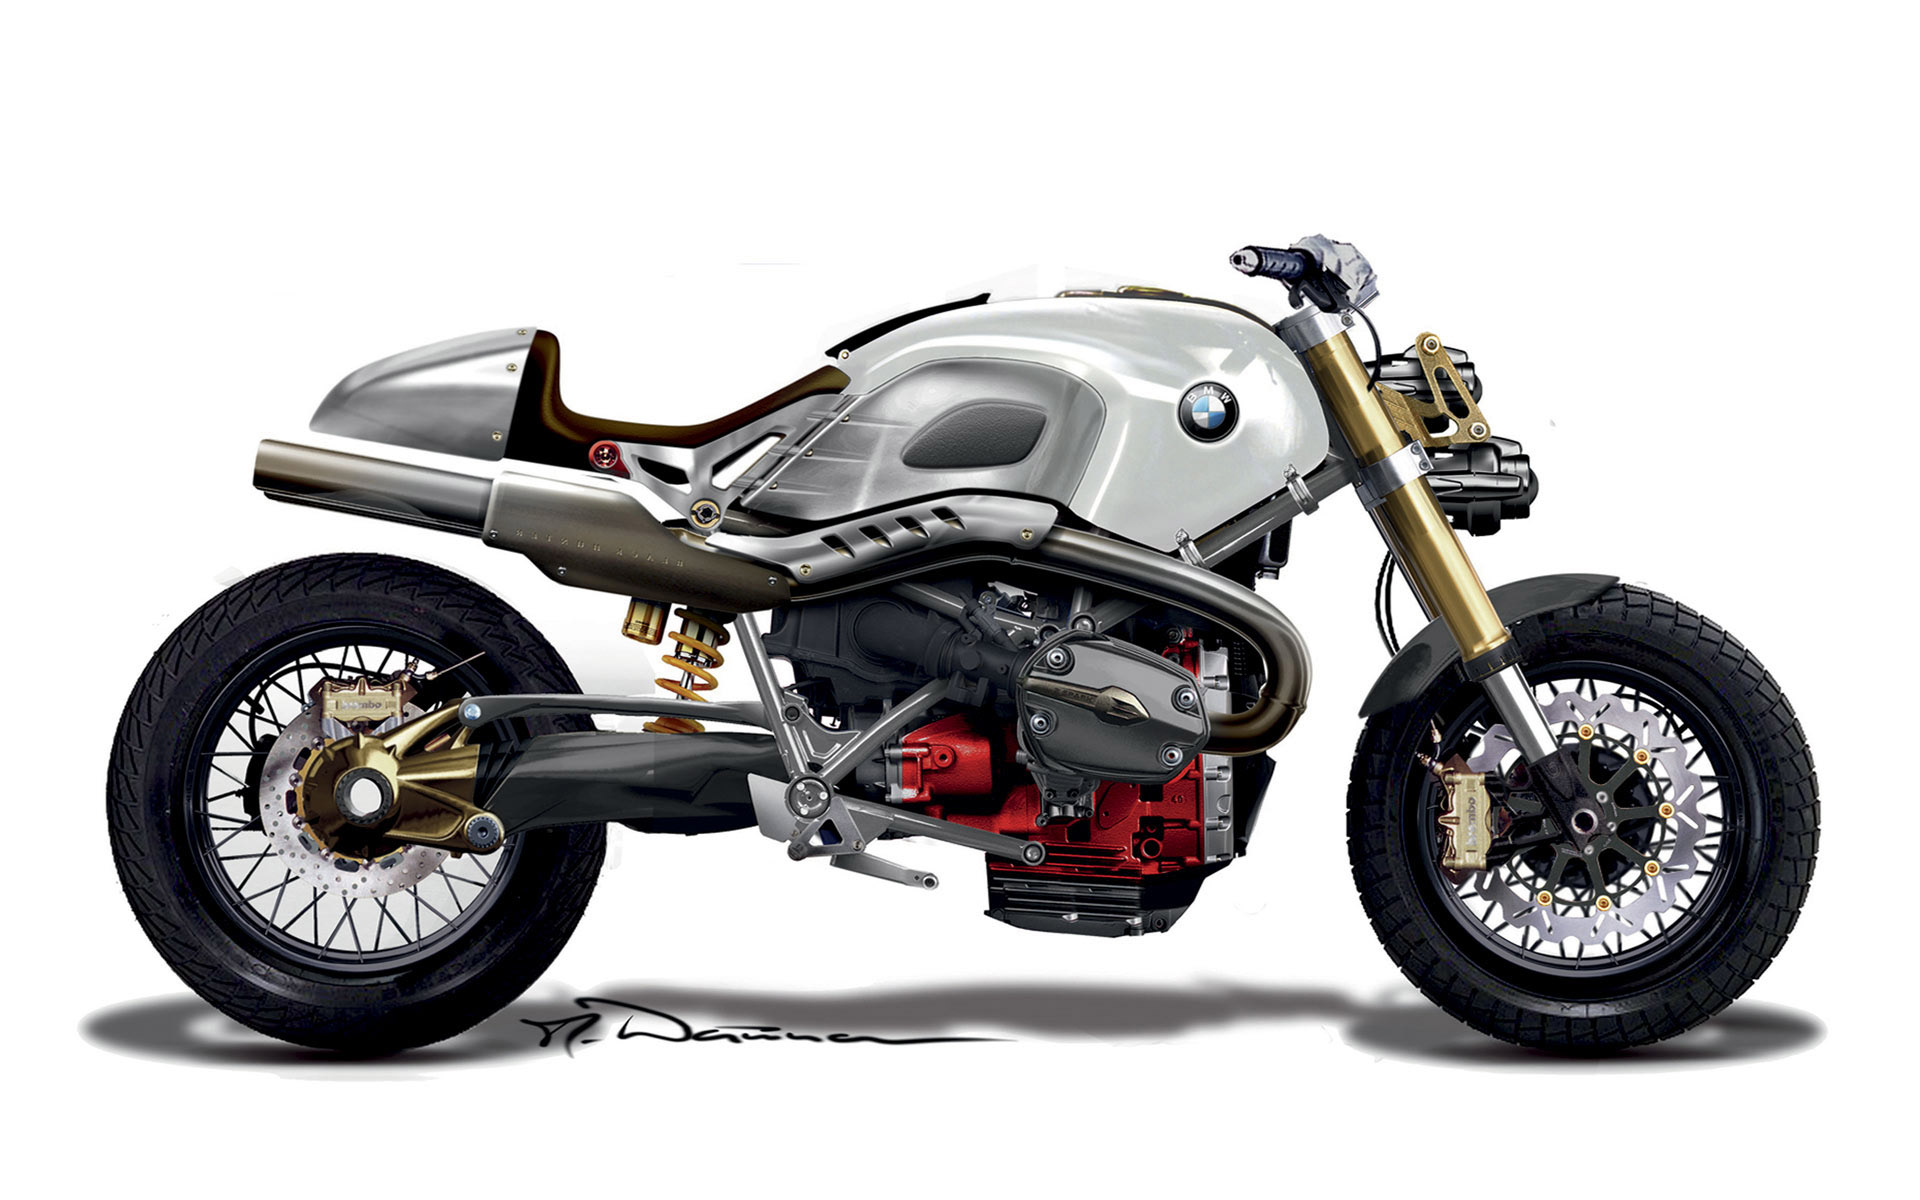 BMW, motorbikes - desktop wallpaper